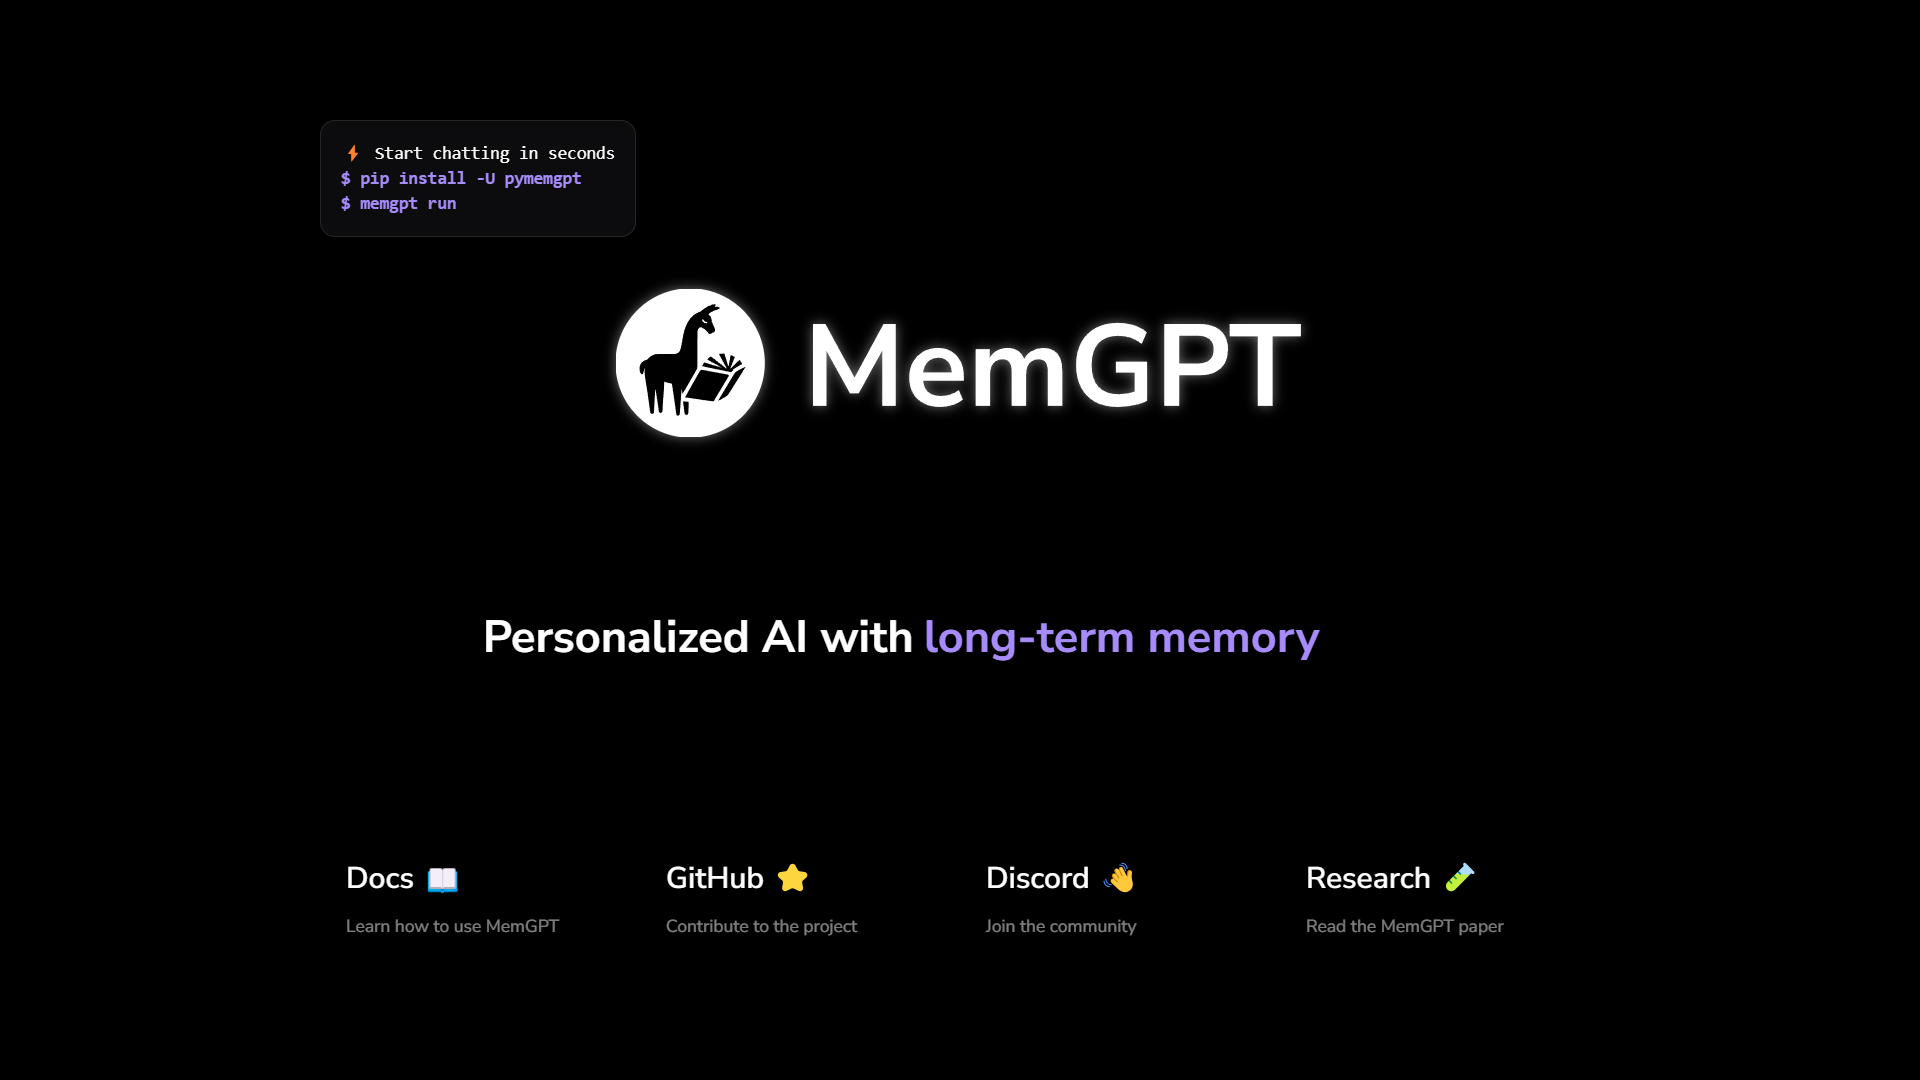 MemGPT: Revolutionizing AI with Long-Term Memory